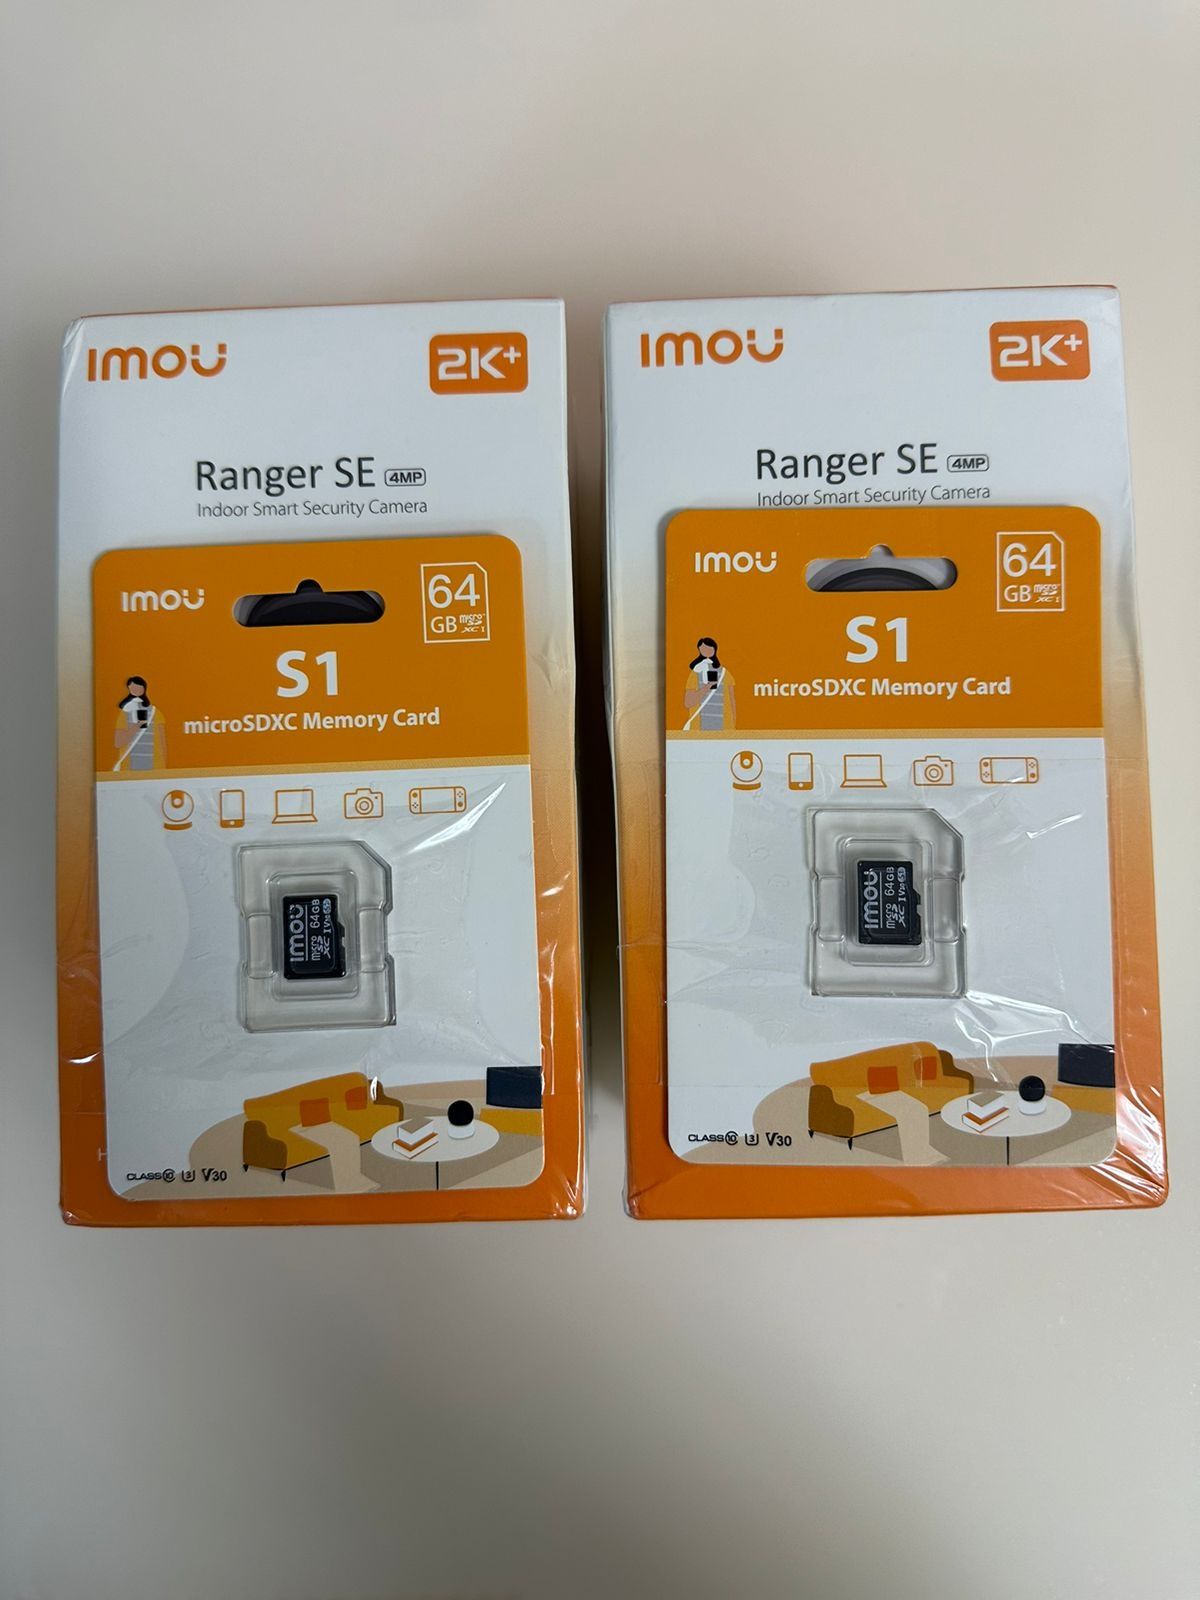 Imou Ranger SE 4 mp + КАРТА памяти 64 Гб камера видеонаблюдения